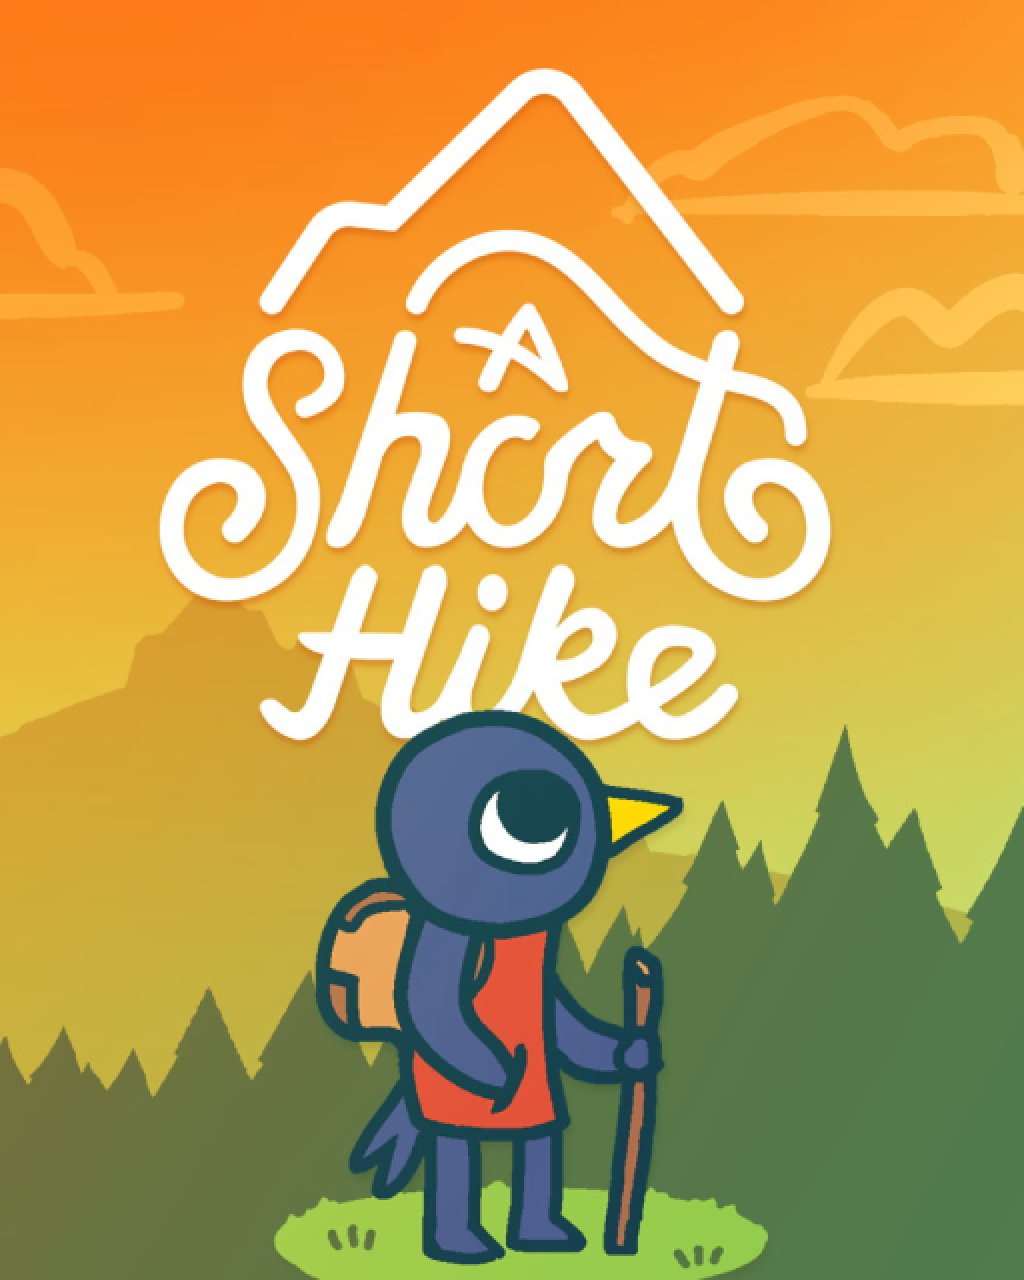 A Short Hike